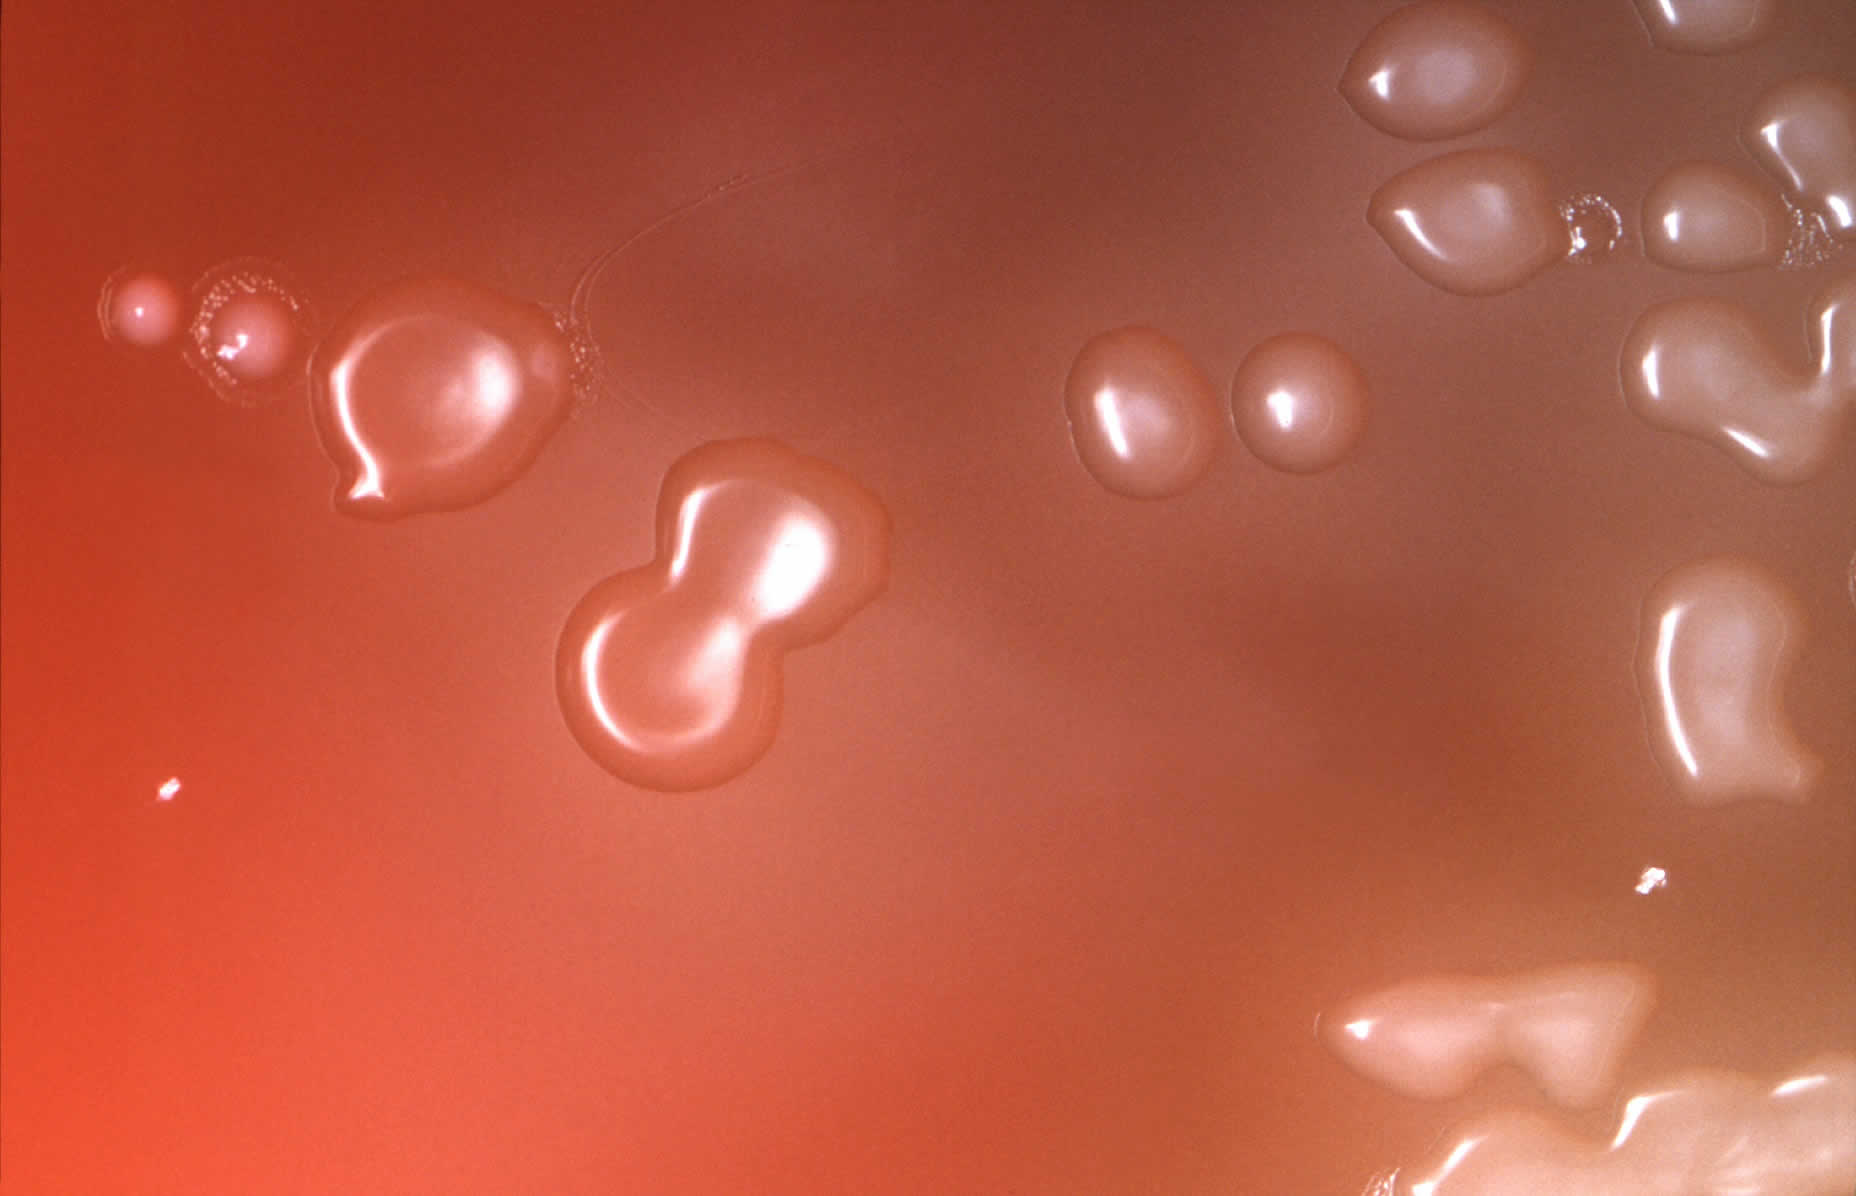 Streptococcus pneumoniae in blood agar